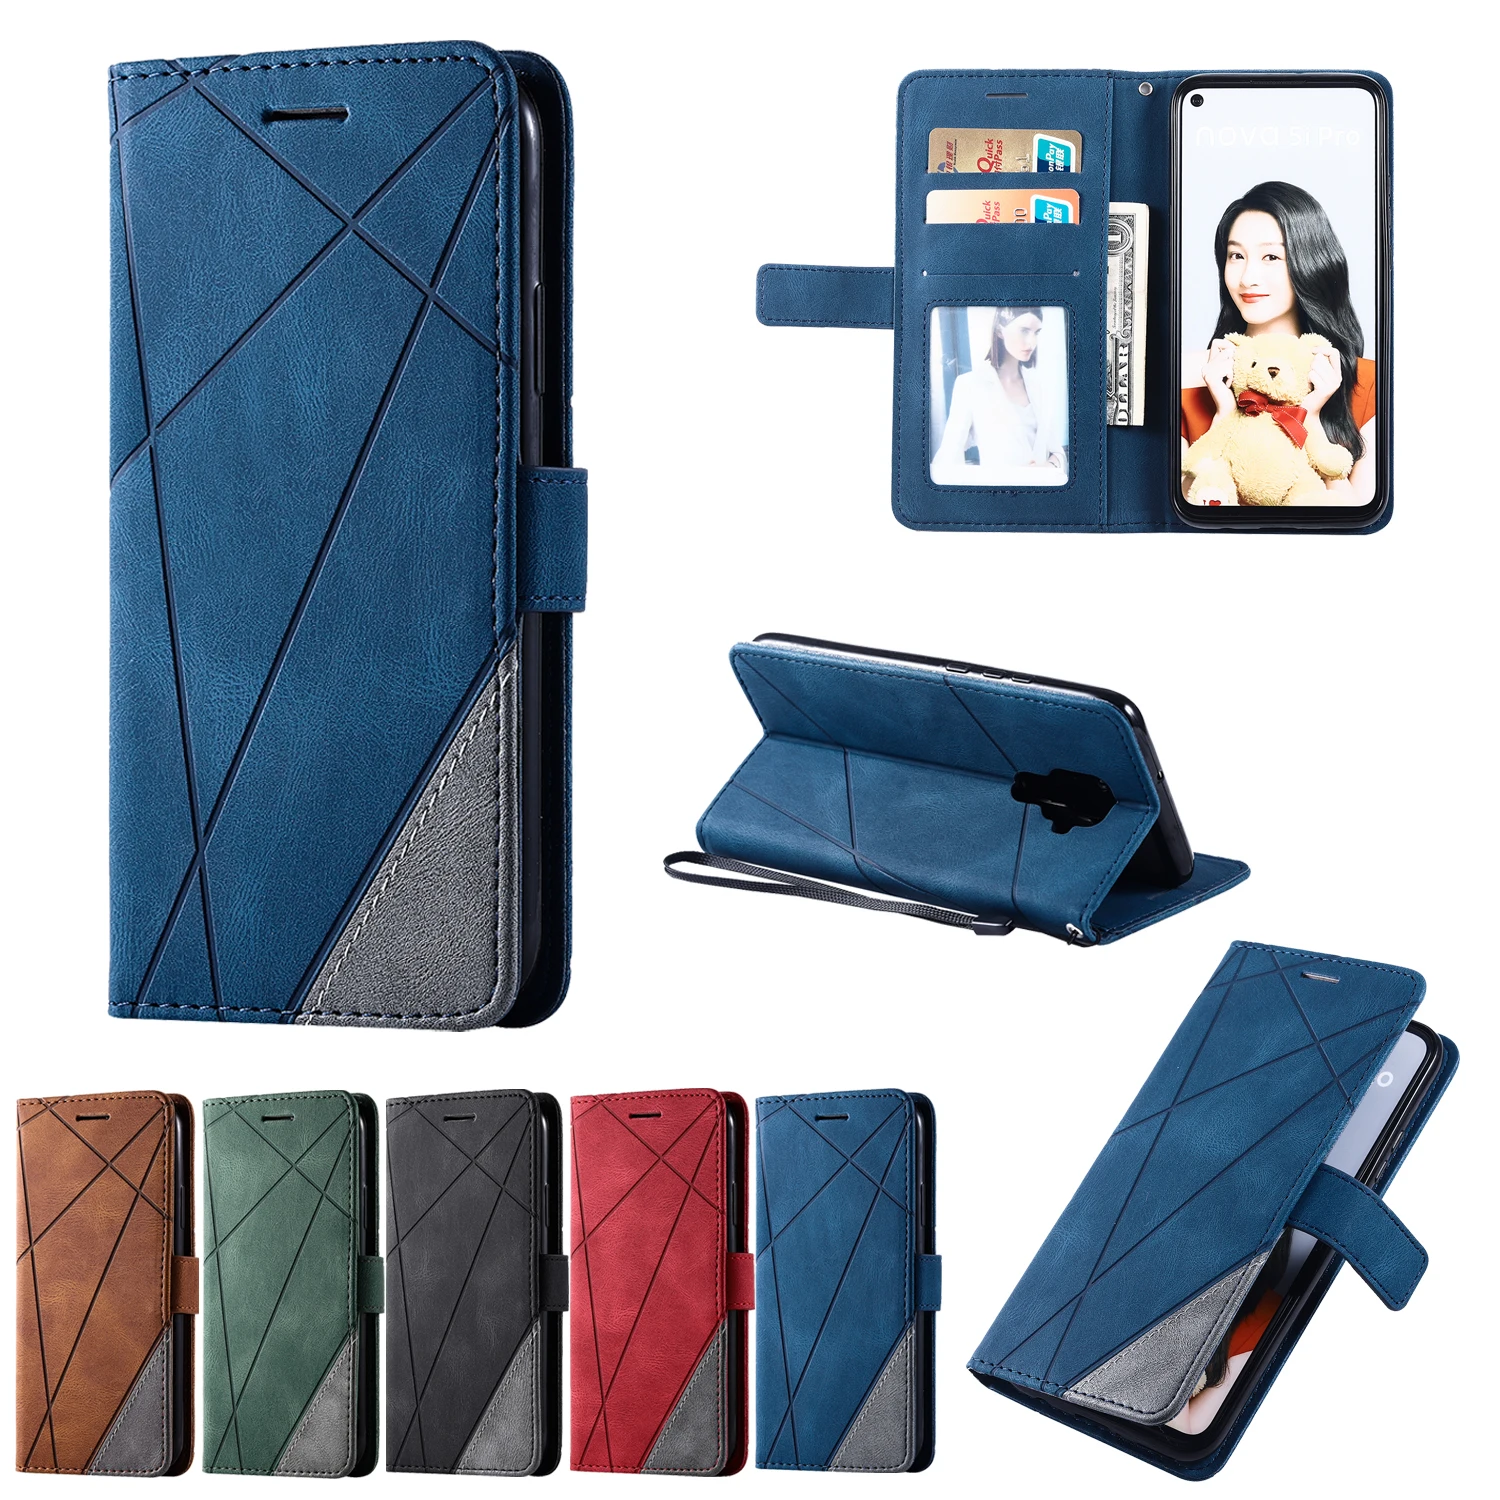 

Fundas Case For Samsung Galaxy Note 8 9 10 Plus 10Pro S 10 Lite S30 S22 S21 20 Ultra A51 M40S A71 A81 M60S A91 Leather Case